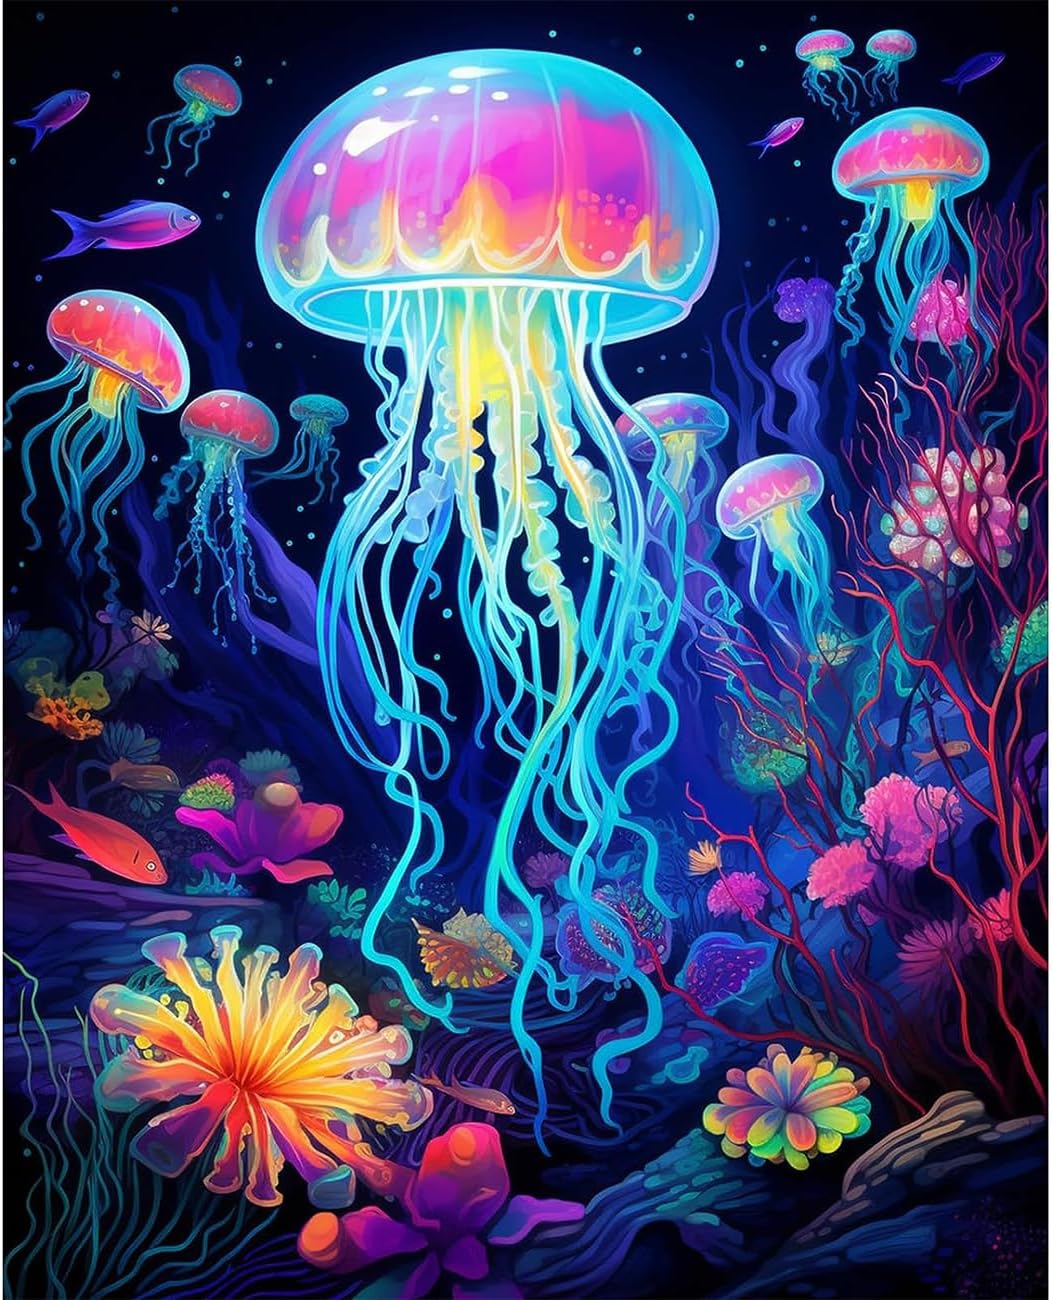 Jellyfish 5D Painting Kits 11.8x15.7 inch